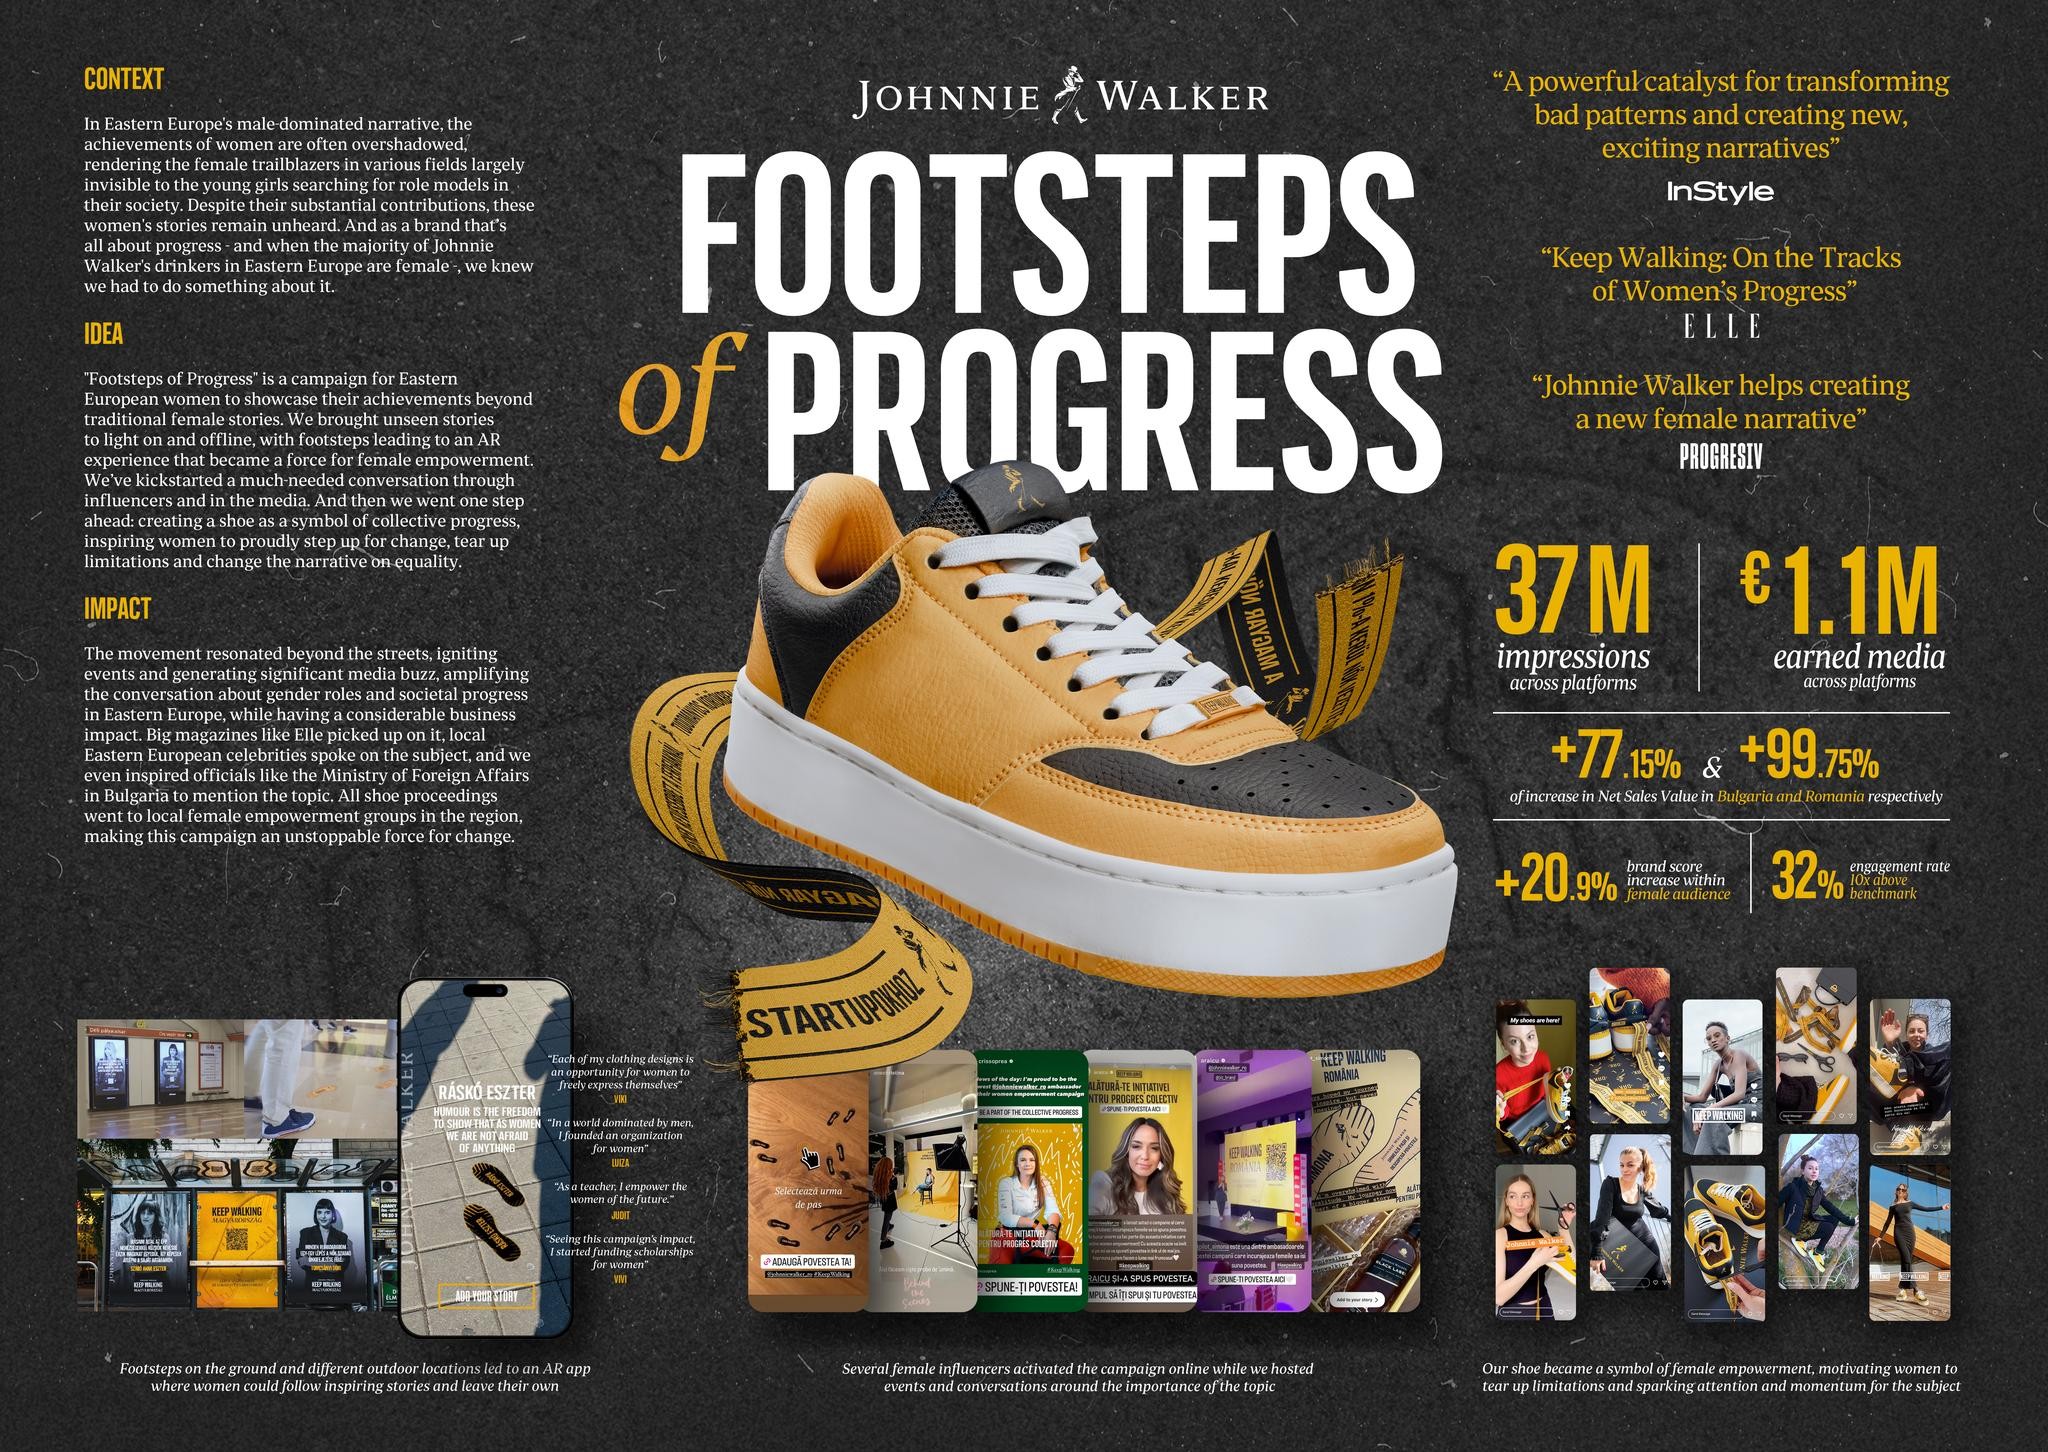 Johnnie Walker - Footsteps of progress